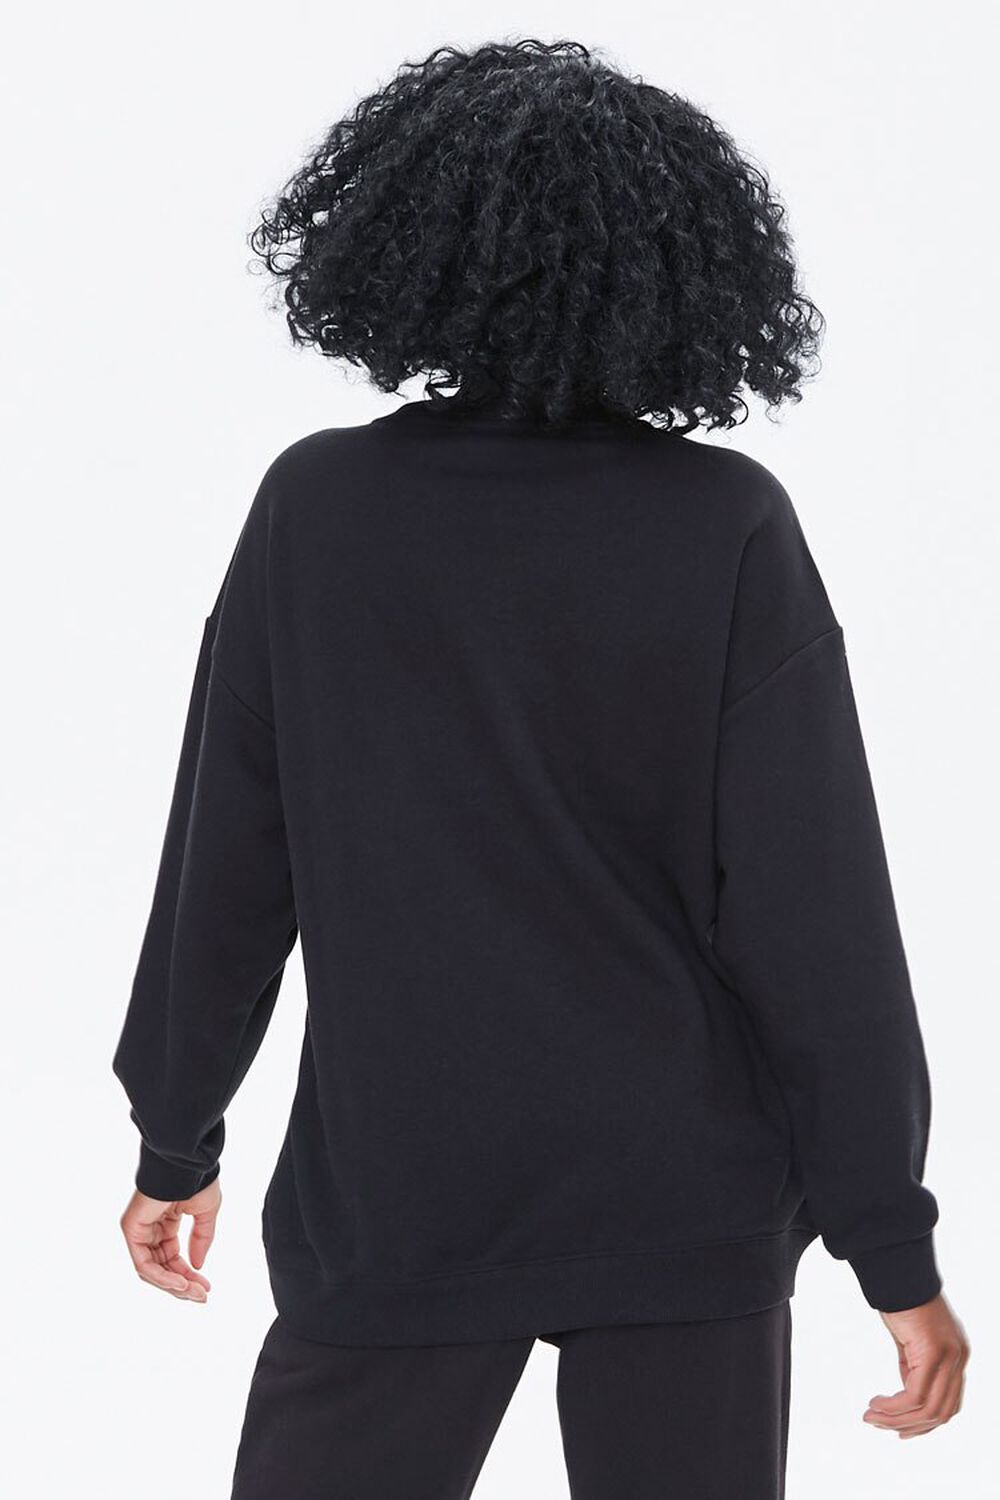 Black Girls Rock Sweater - Unisex – My Black Clothing